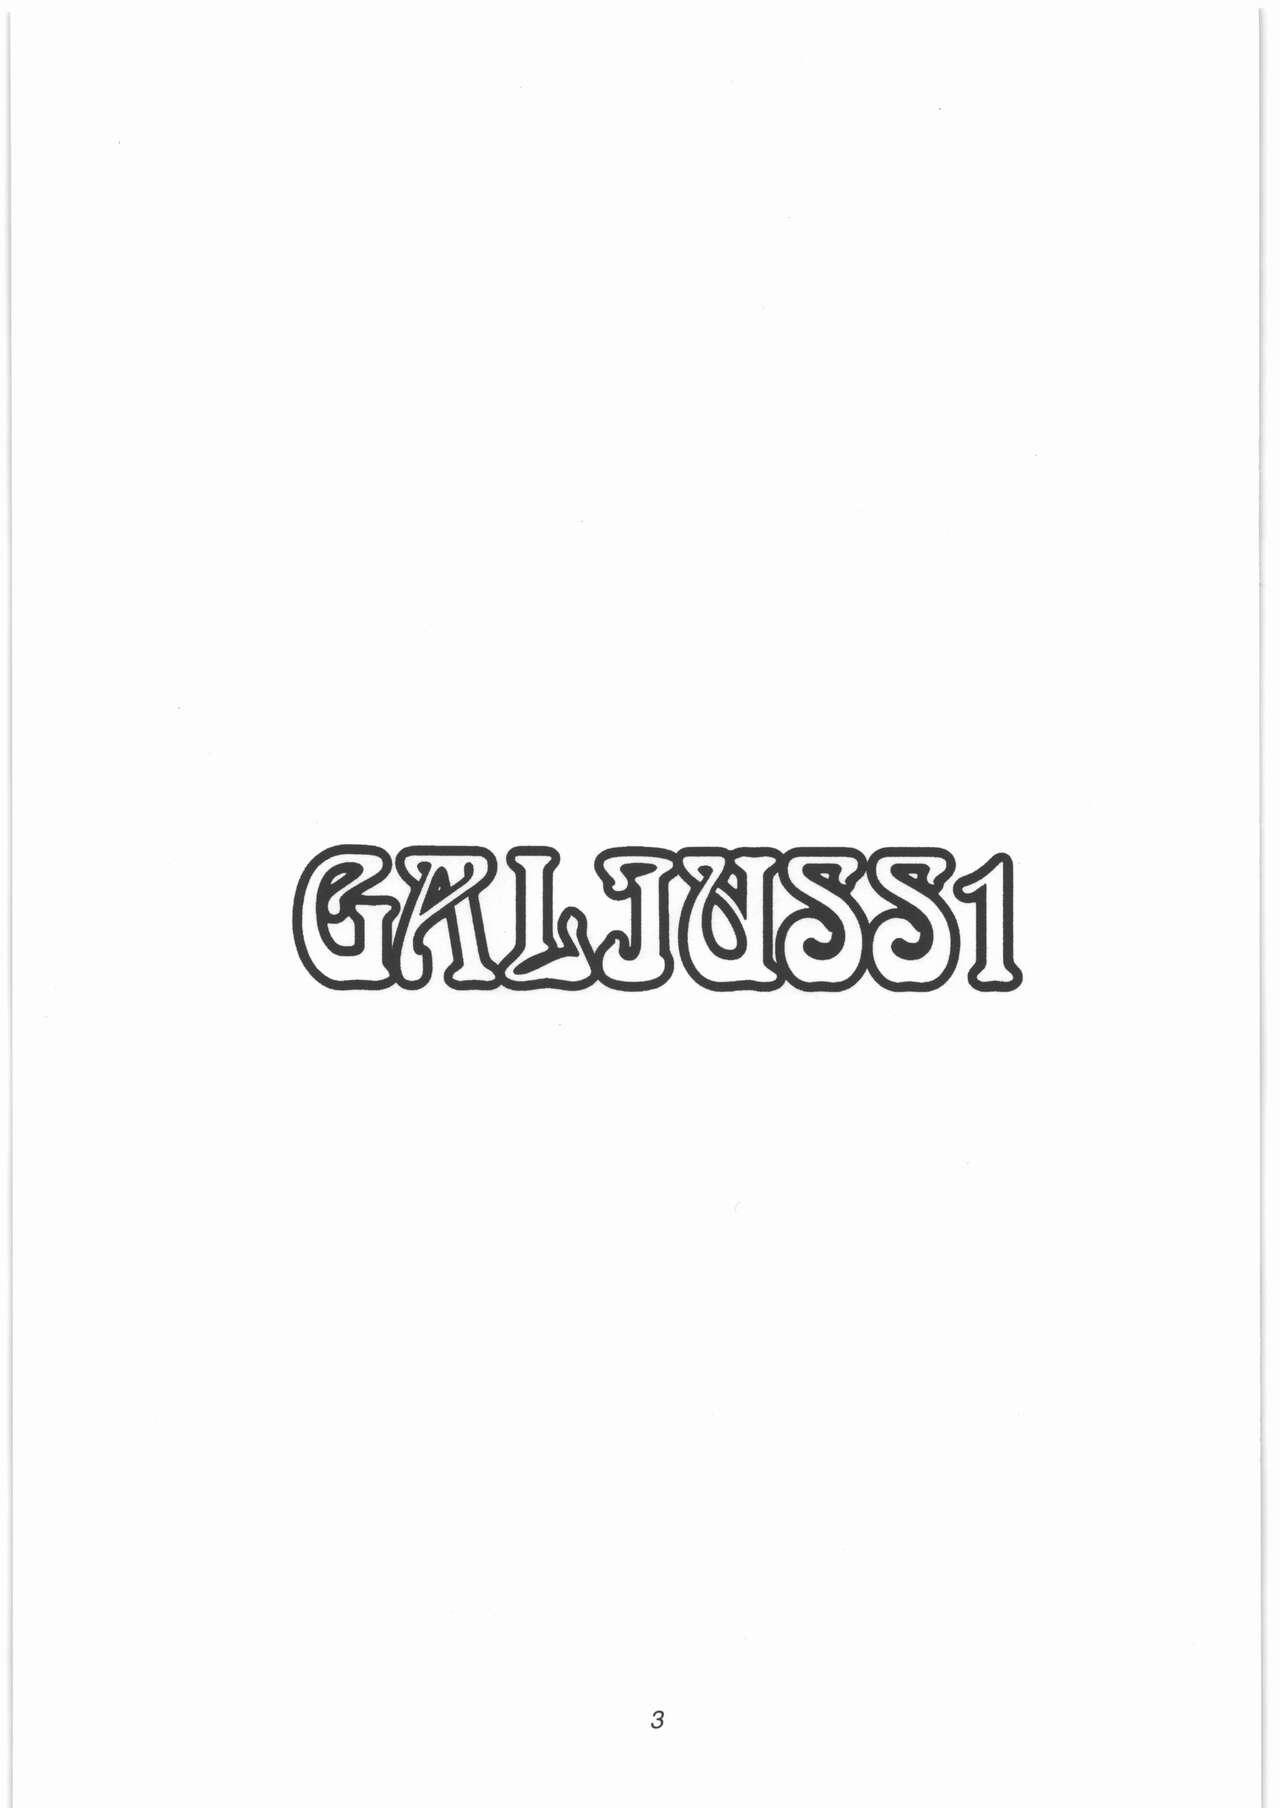 GALIUSS 1 1